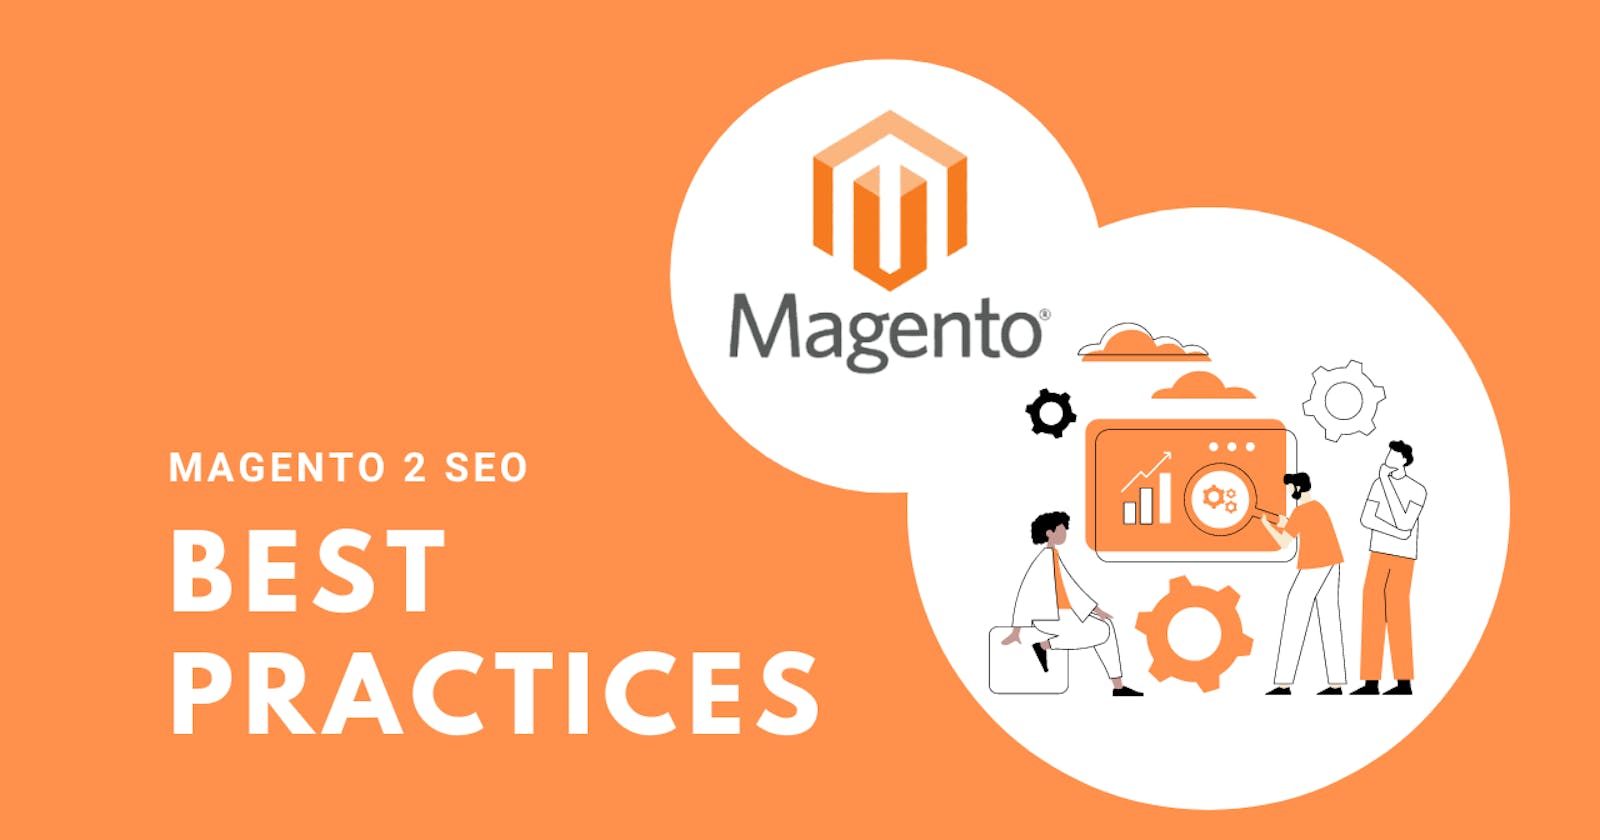 Magento 2 SEO best practices